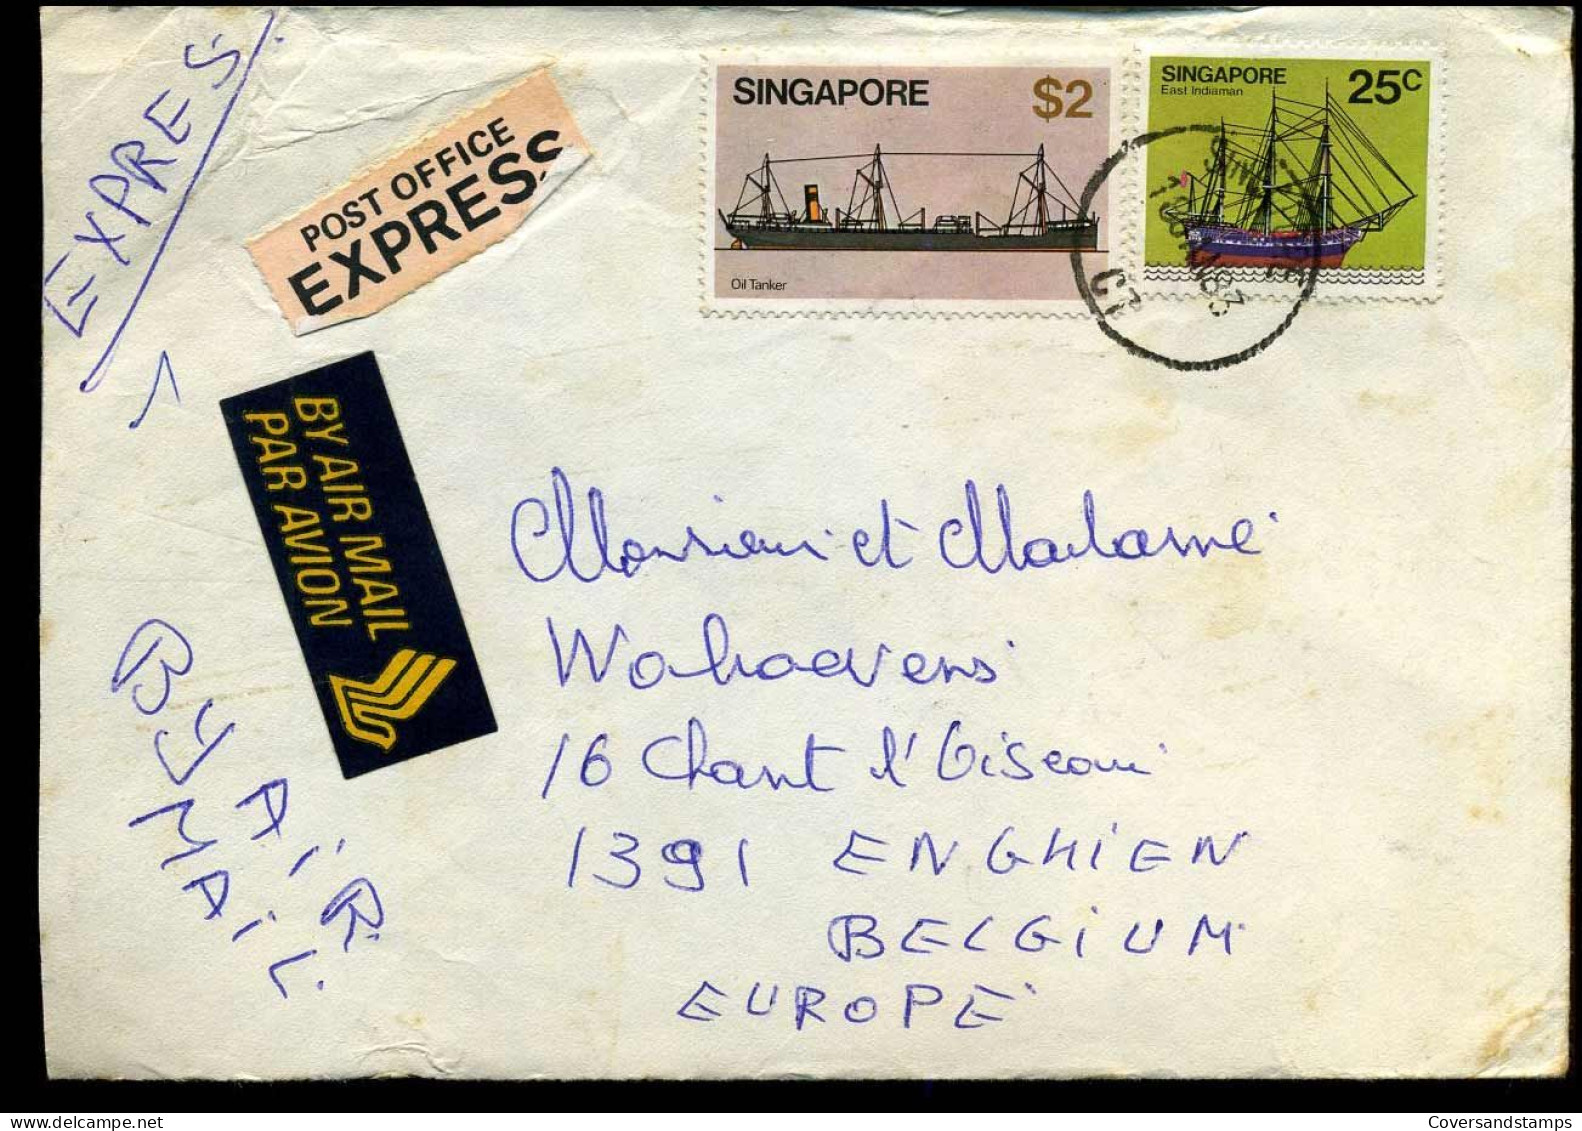 Express Cover To Petit-Enghien, Belgium - Singapore (1959-...)